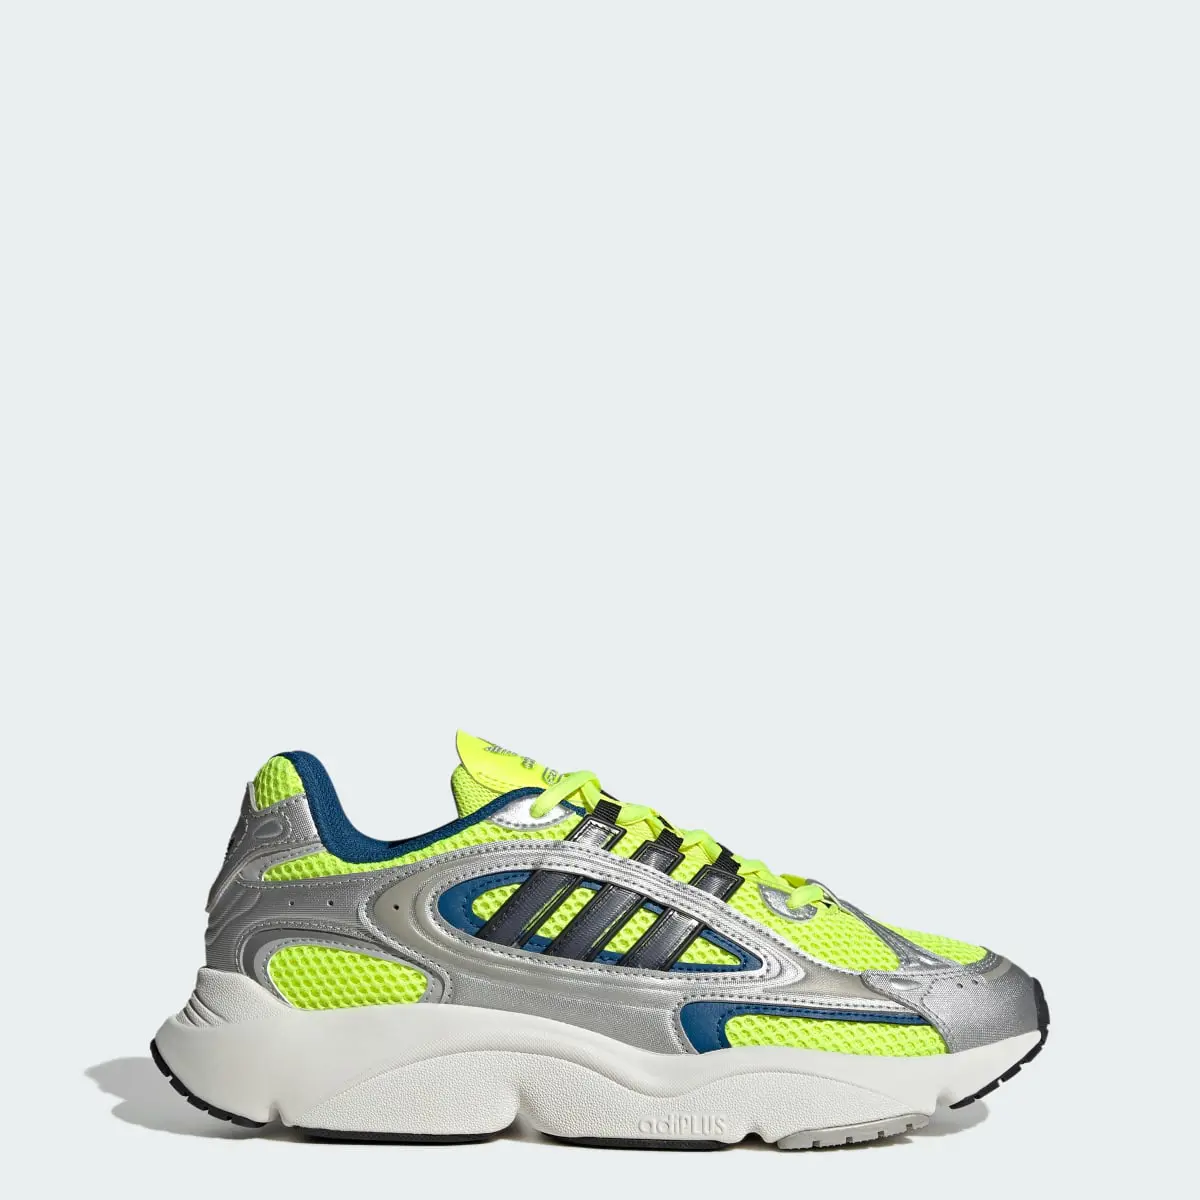 Adidas OZMILLEN shoes. 1